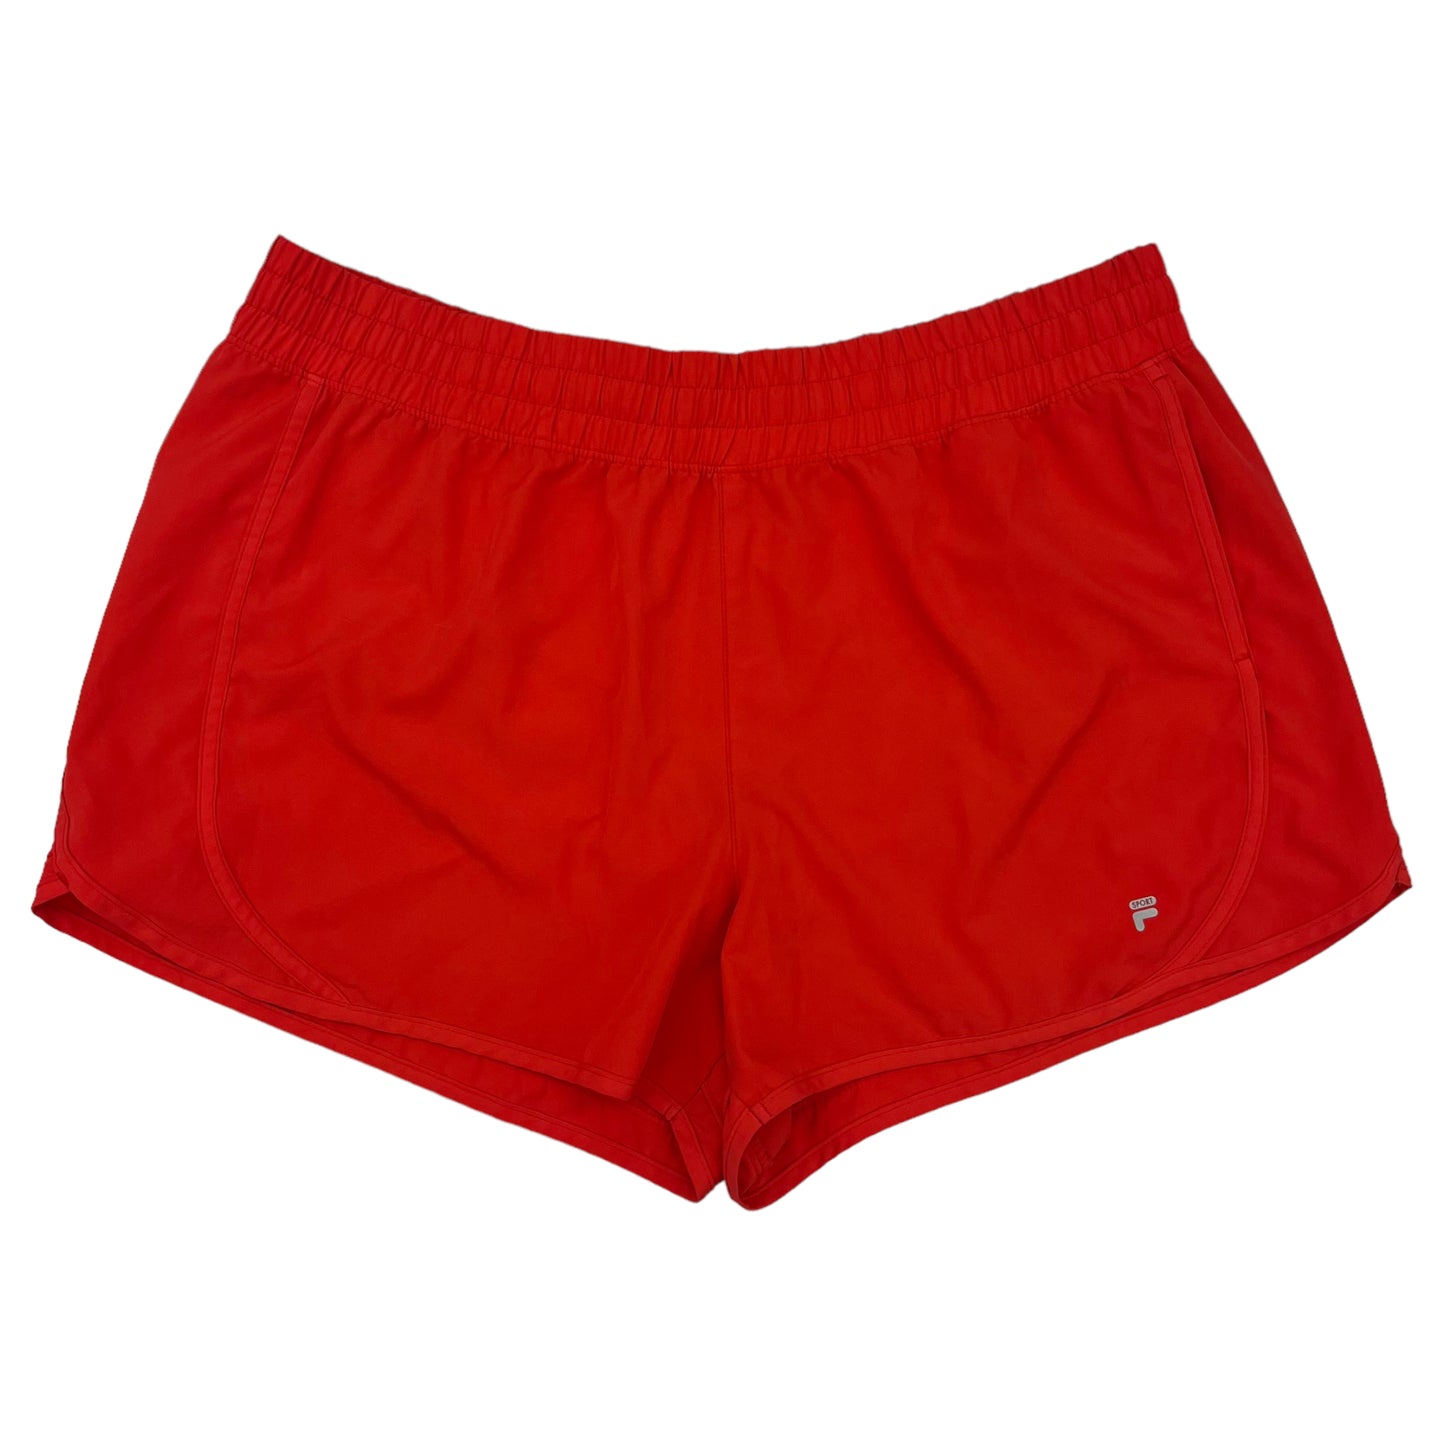 Athletic Shorts By Fila  Size: Xxl